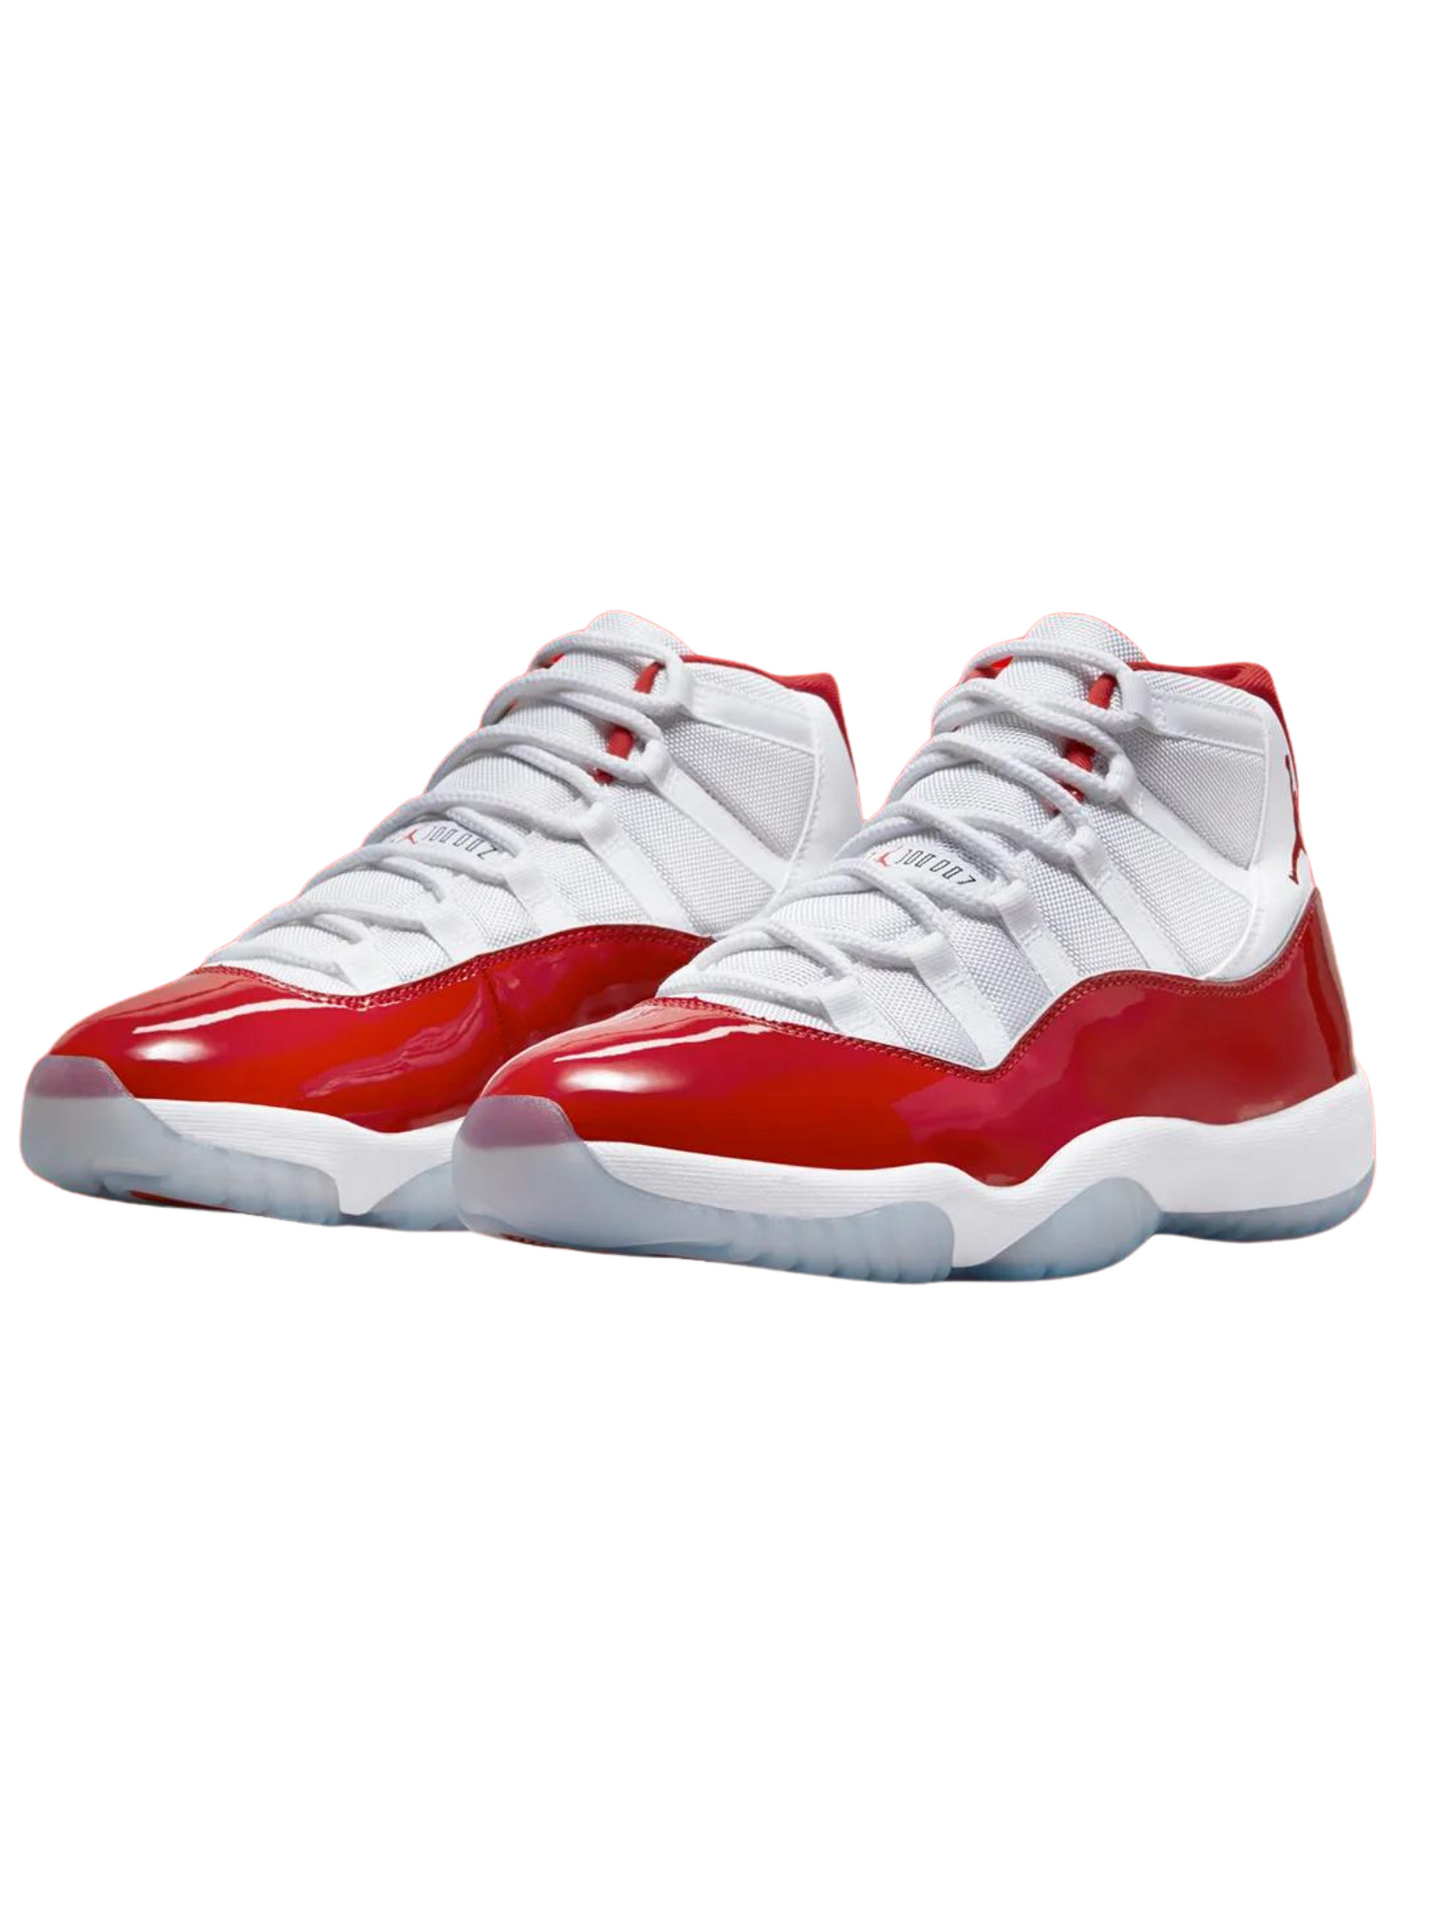 Jordan 11 Cherry Size 12